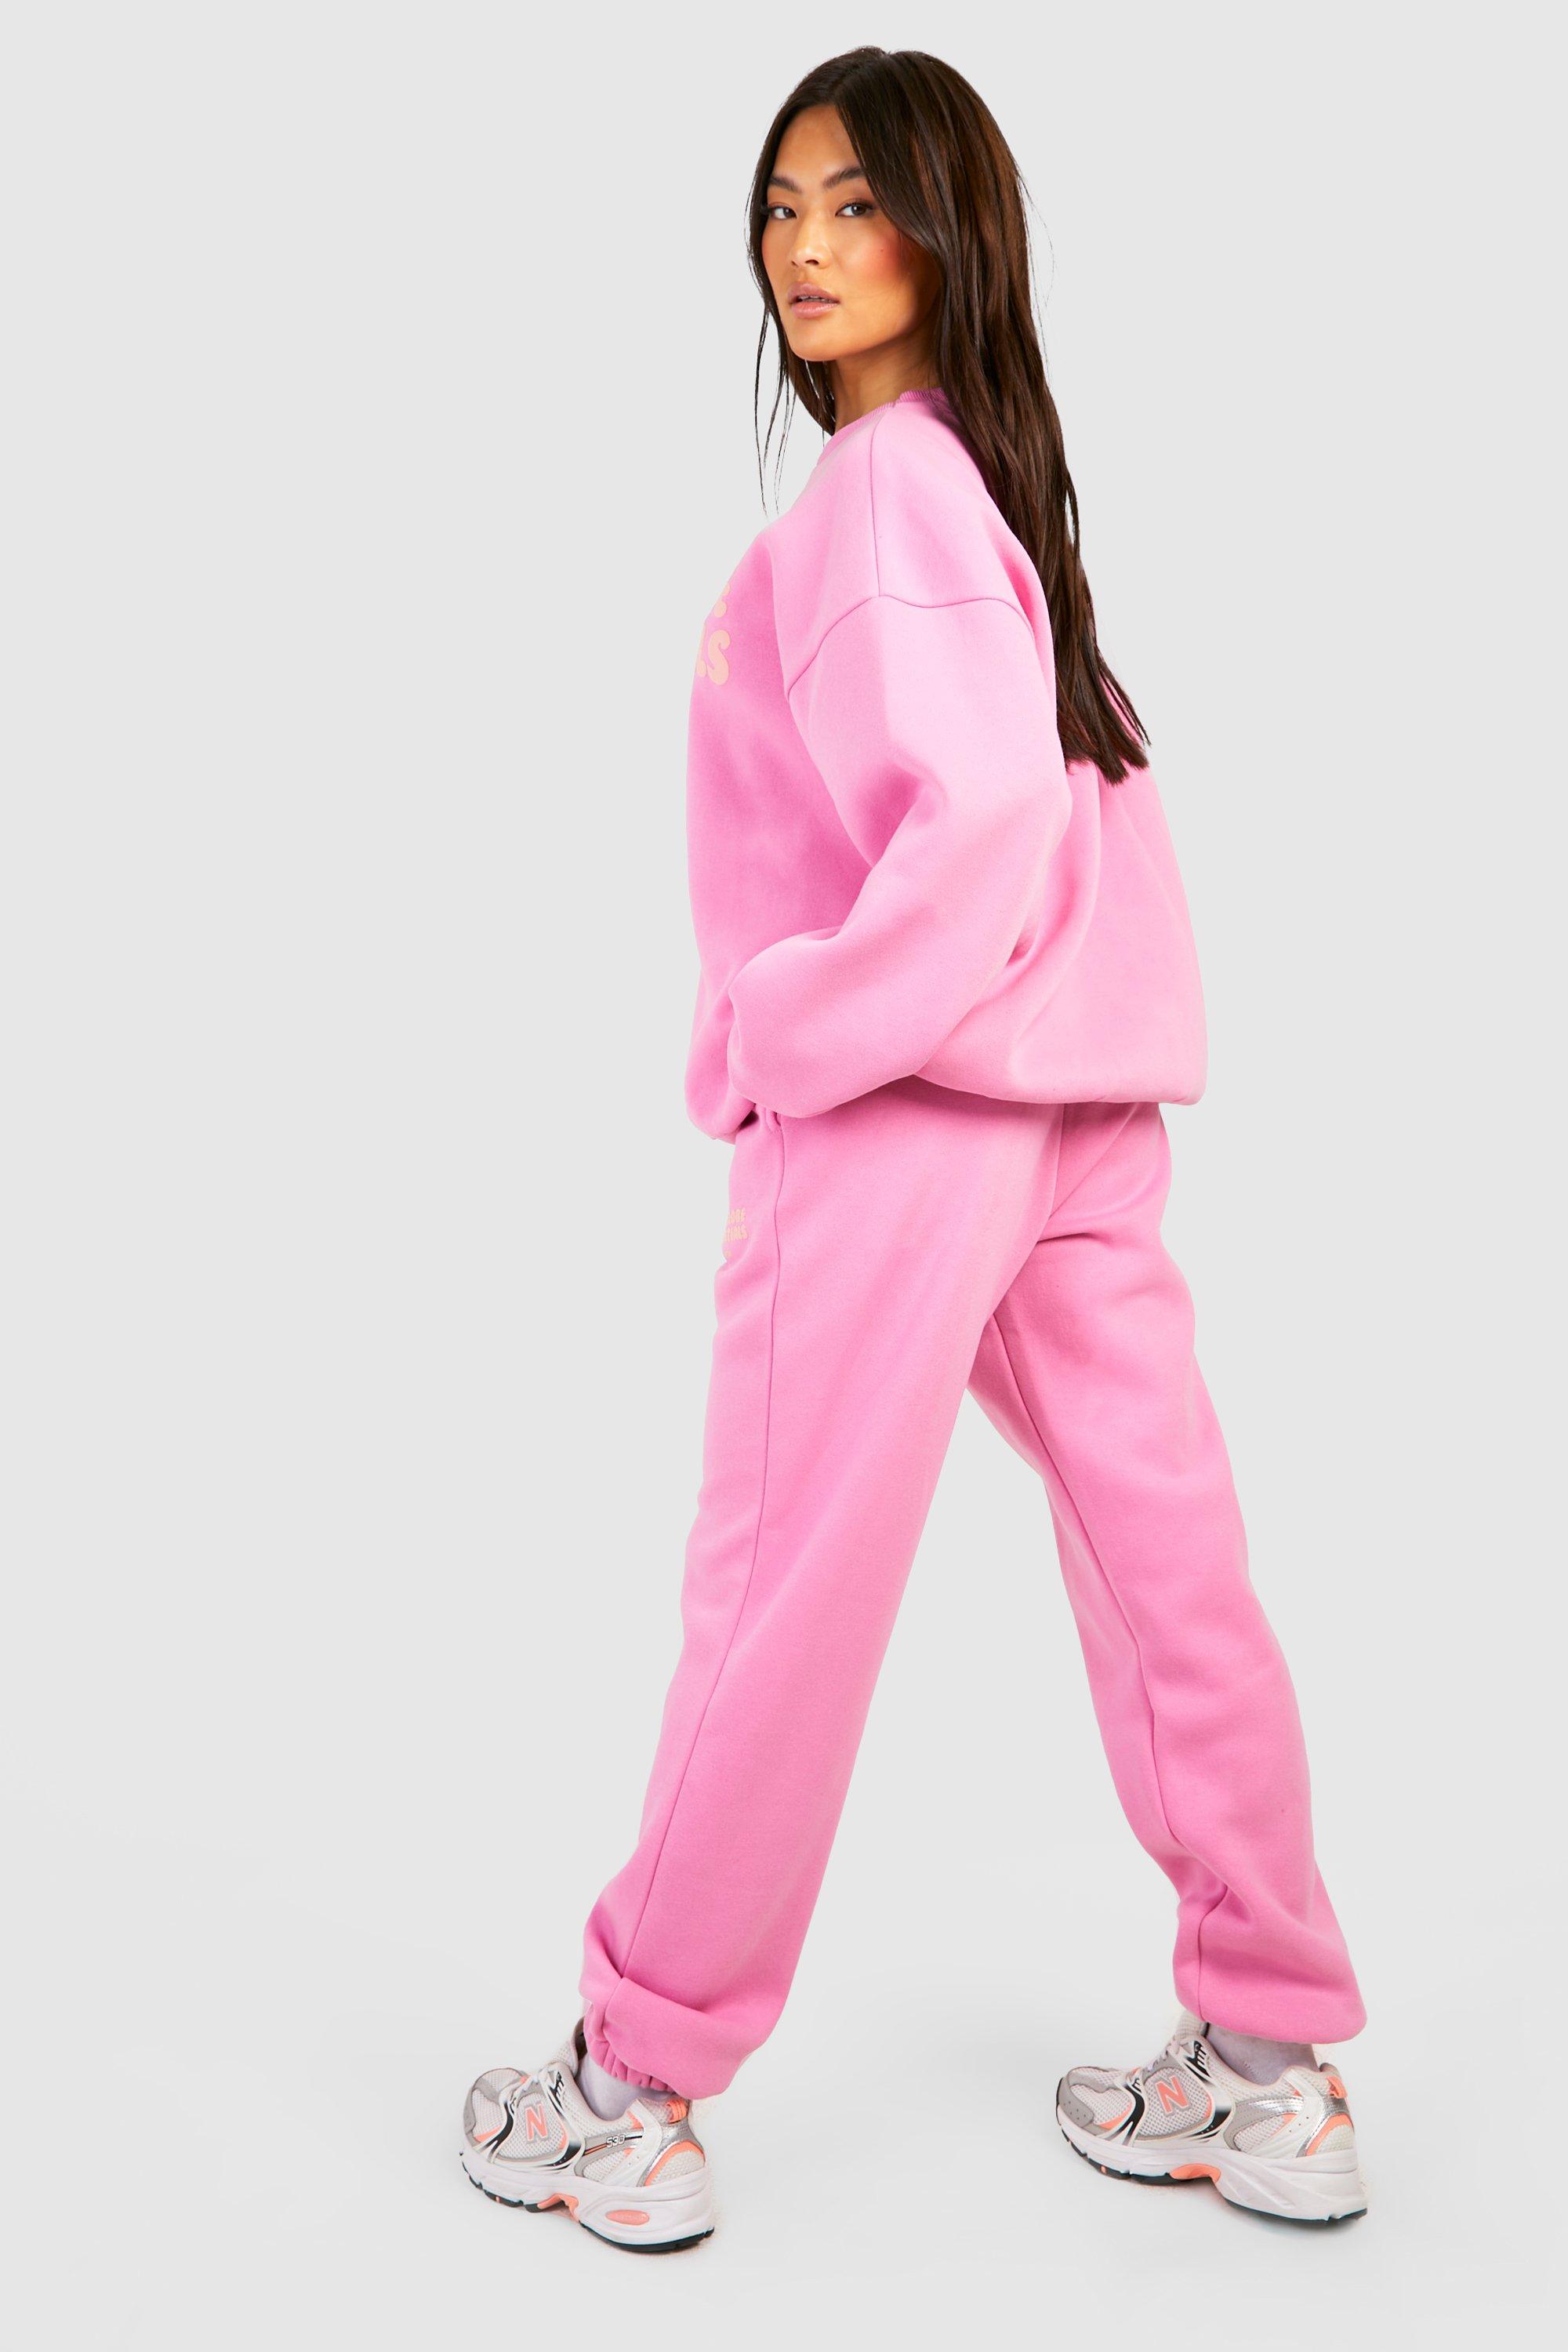 Grinch,Grinch Sweatshirt,Women's Hooded Sports Tracksuit Unisex Two-Piece Running  Outfits Long Sleeve Pullover Hoodies Sweatshirt+Sweatpants Set(Pink,3XL) 